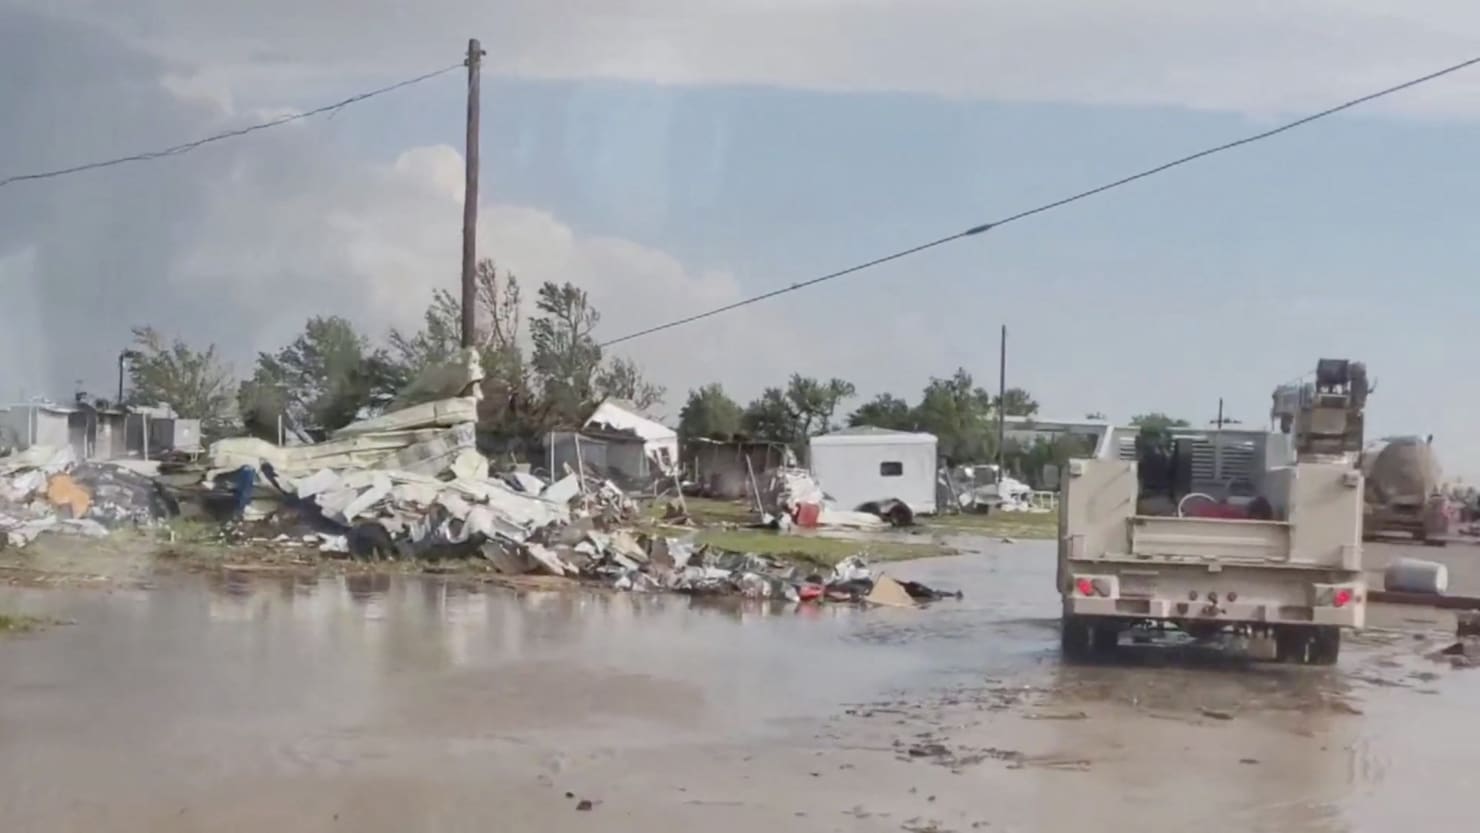 3 Killed, Dozens Hurt After Tornado Rips Through Texas Town of Perryton